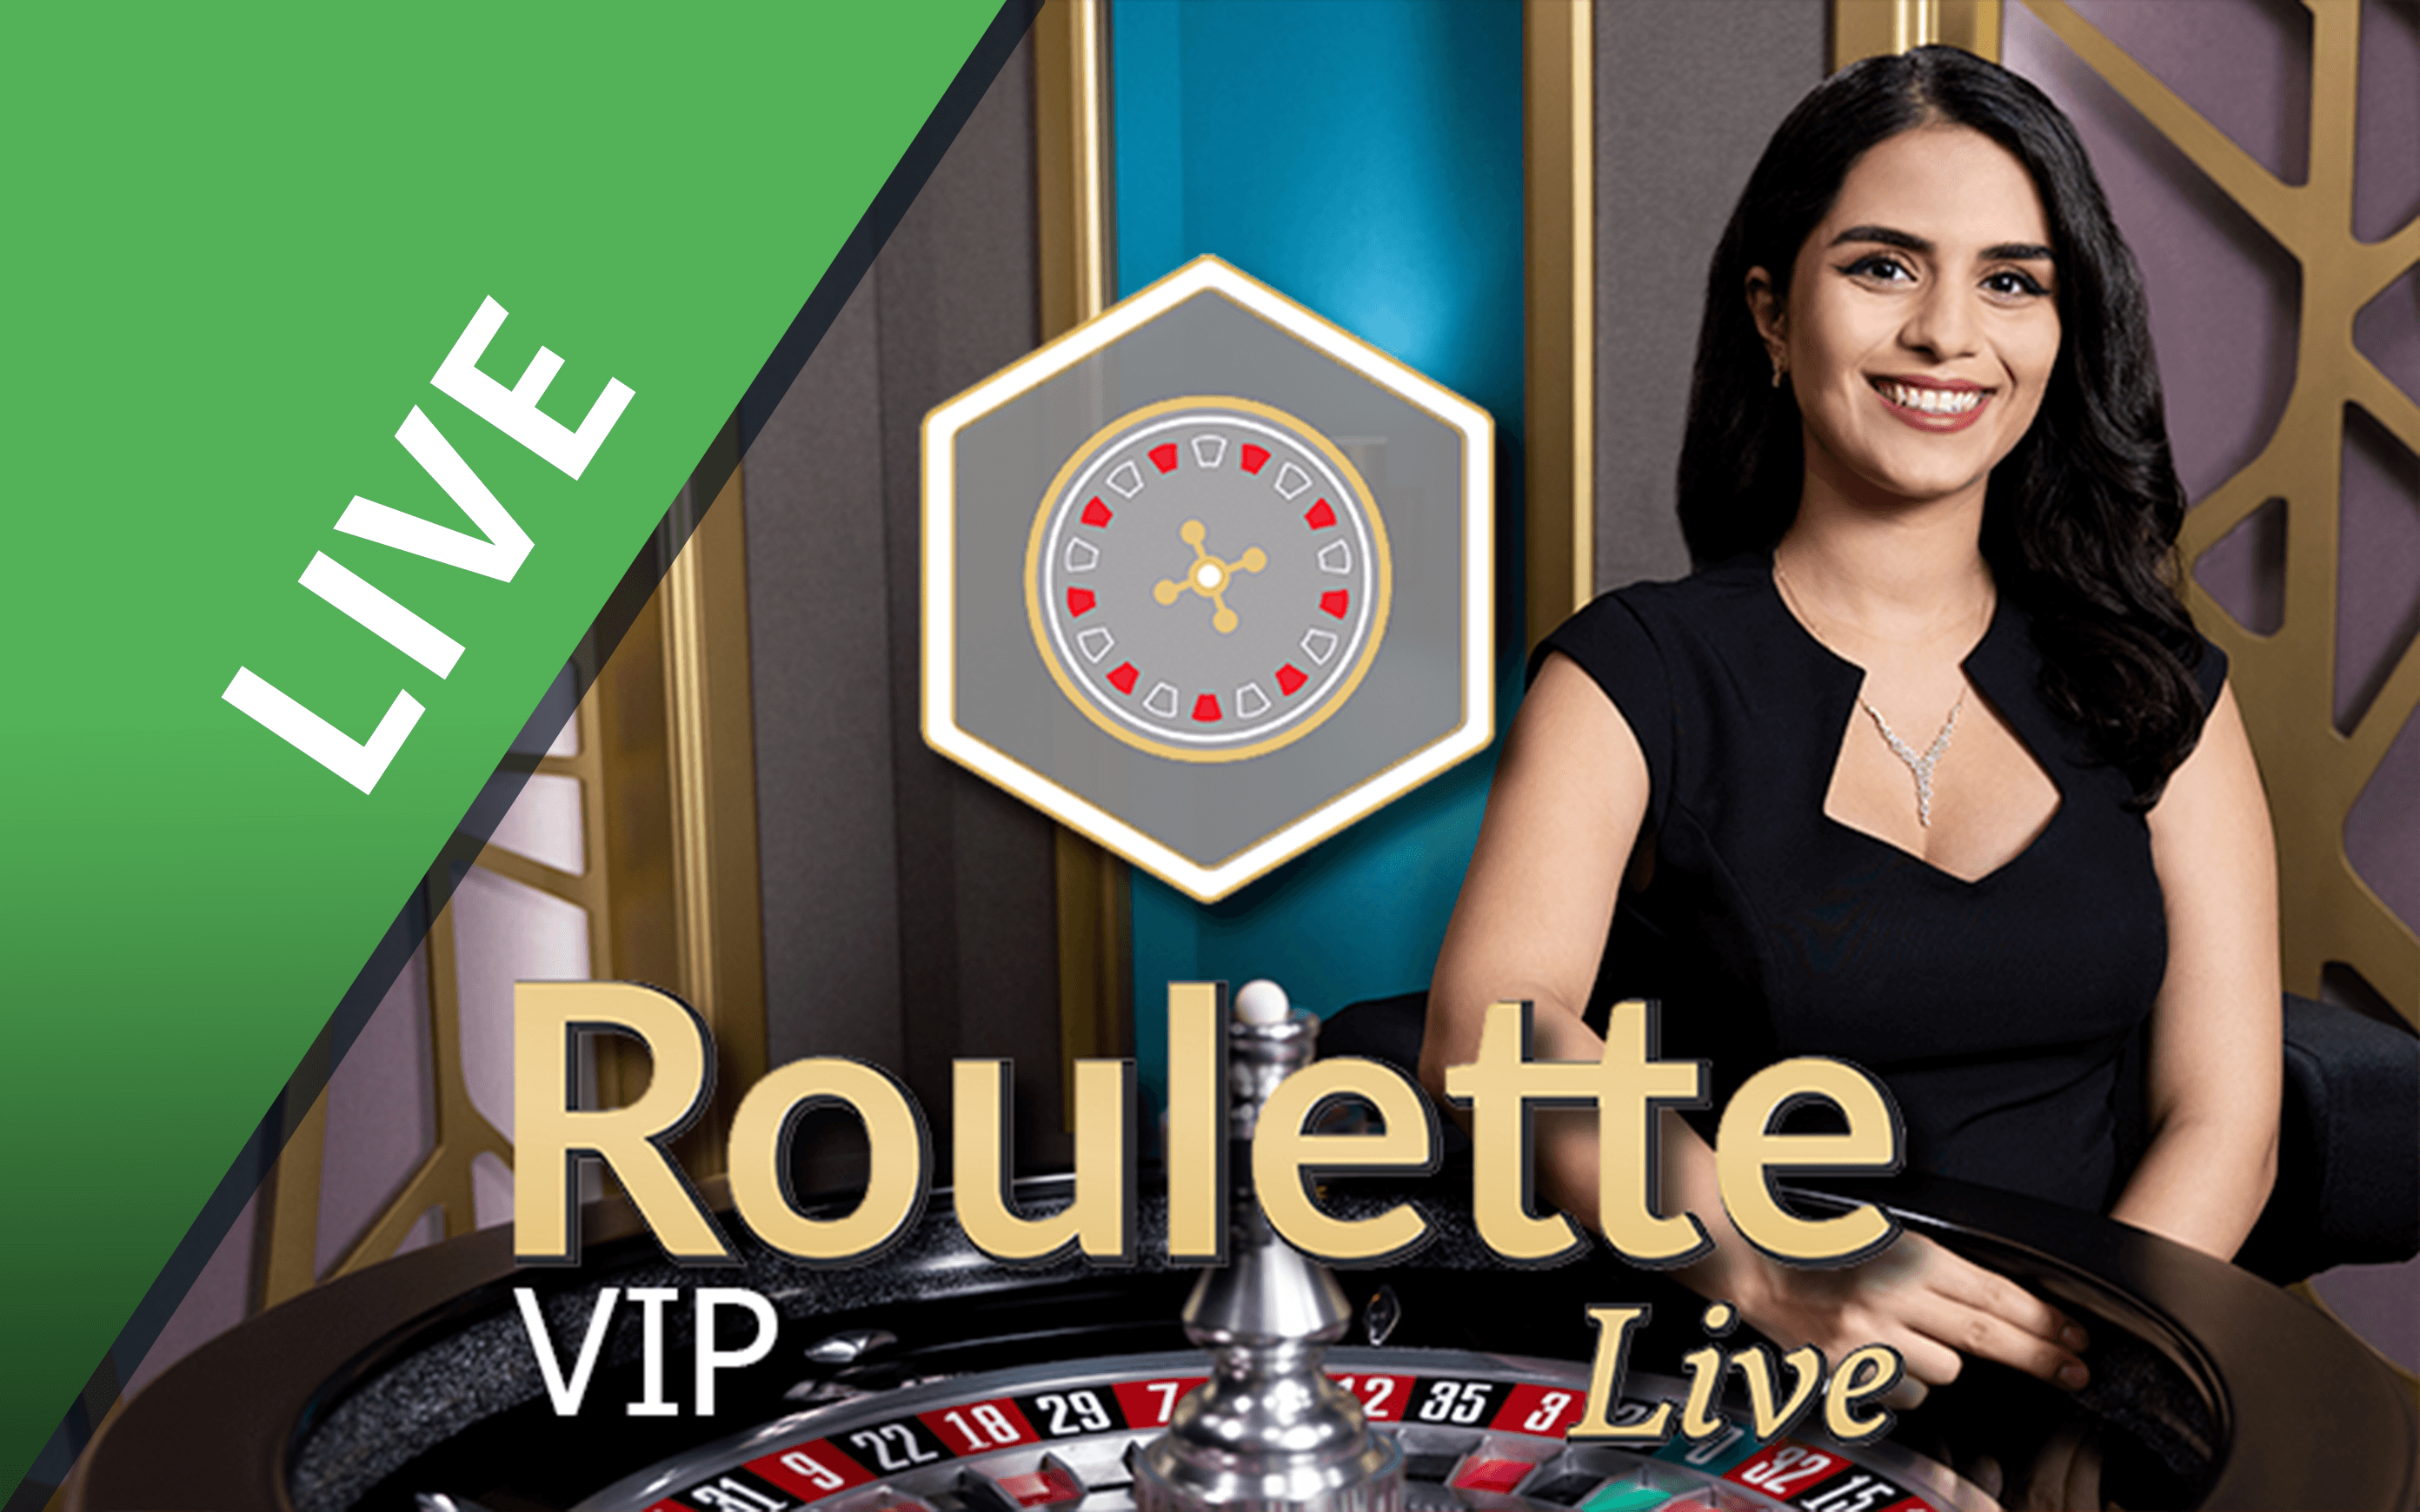 Play Roulette VIP on Starcasino.be online casino